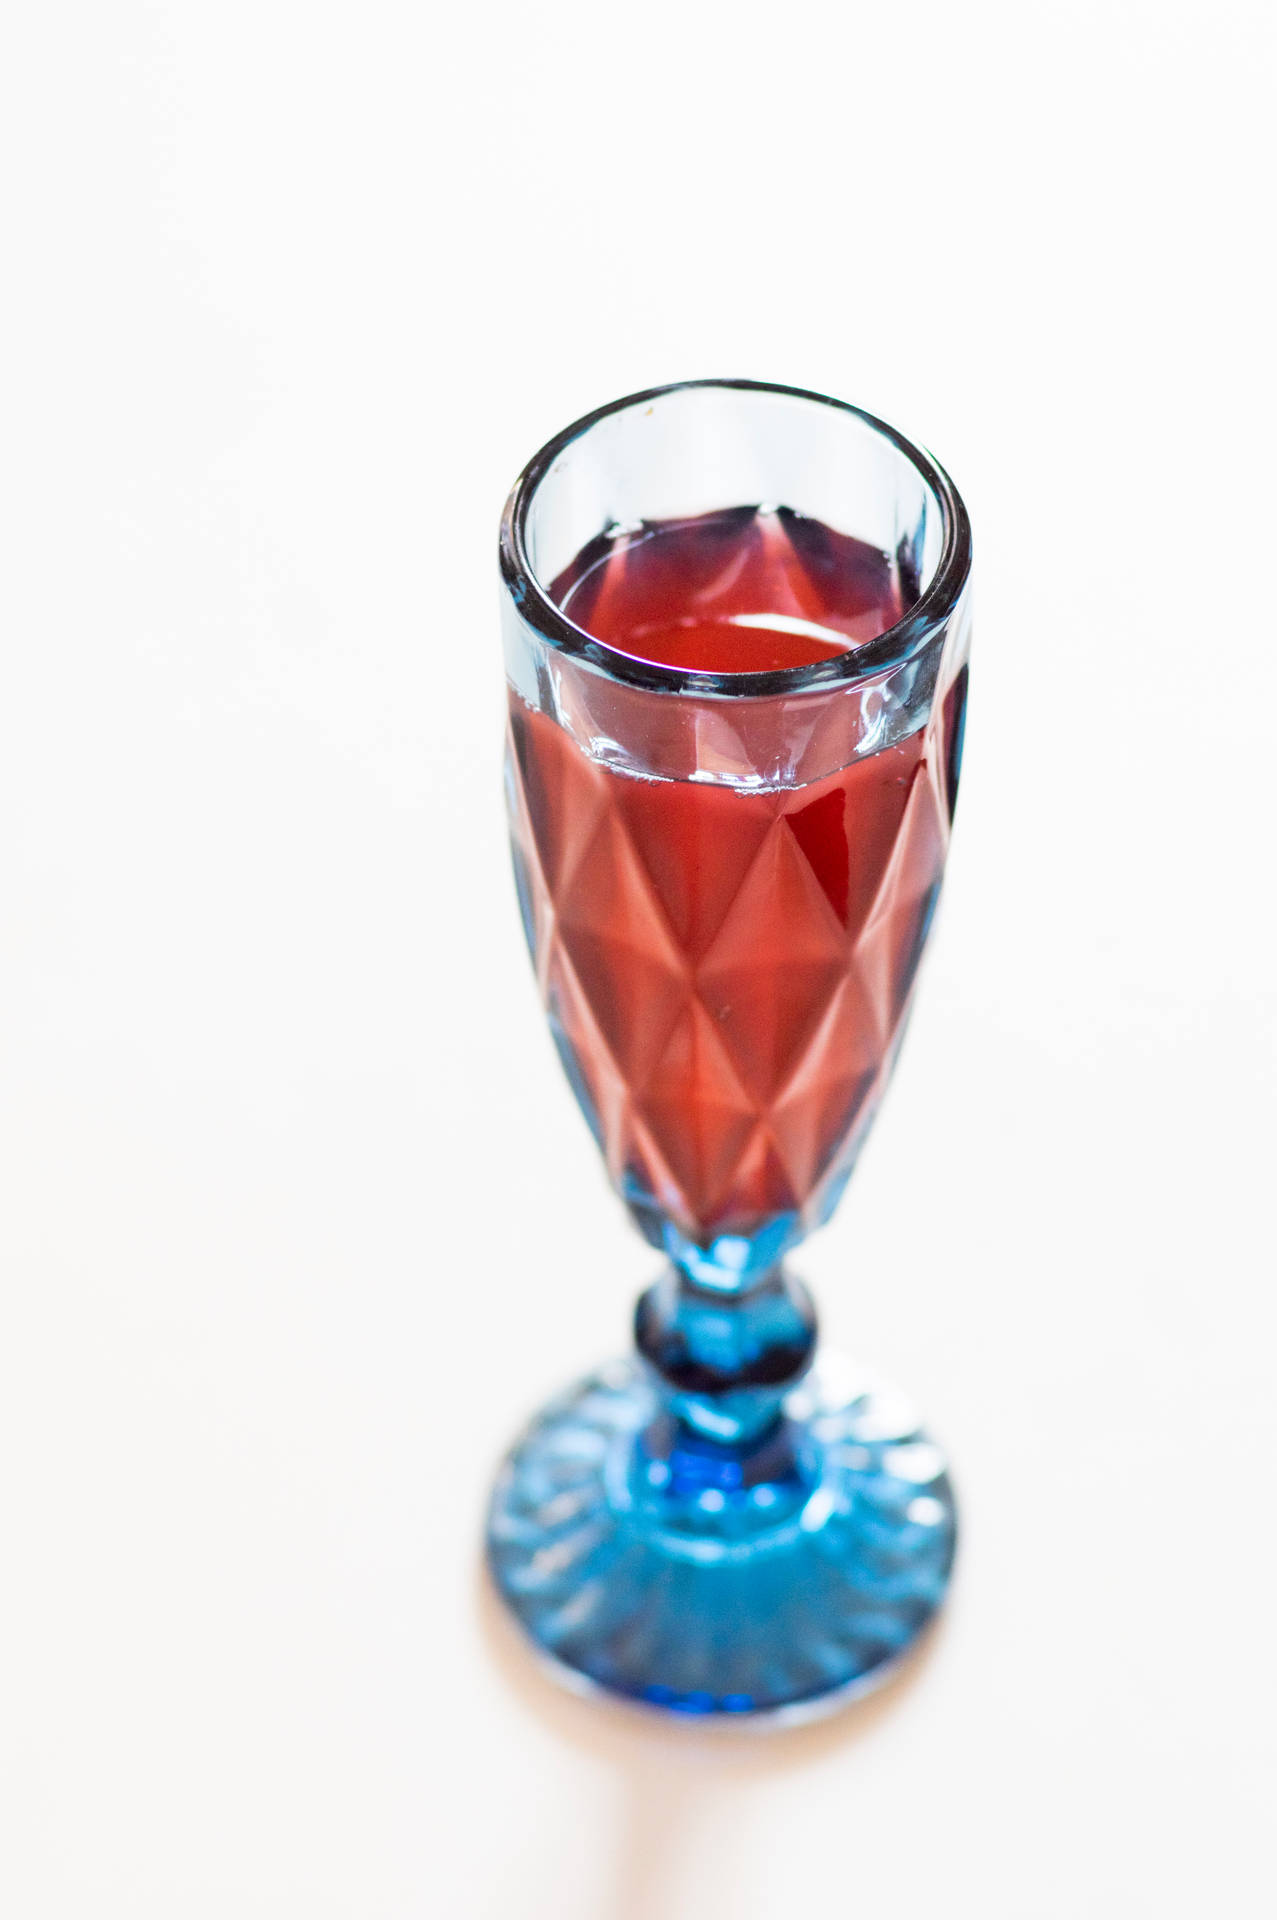 Transparent Wine Glass